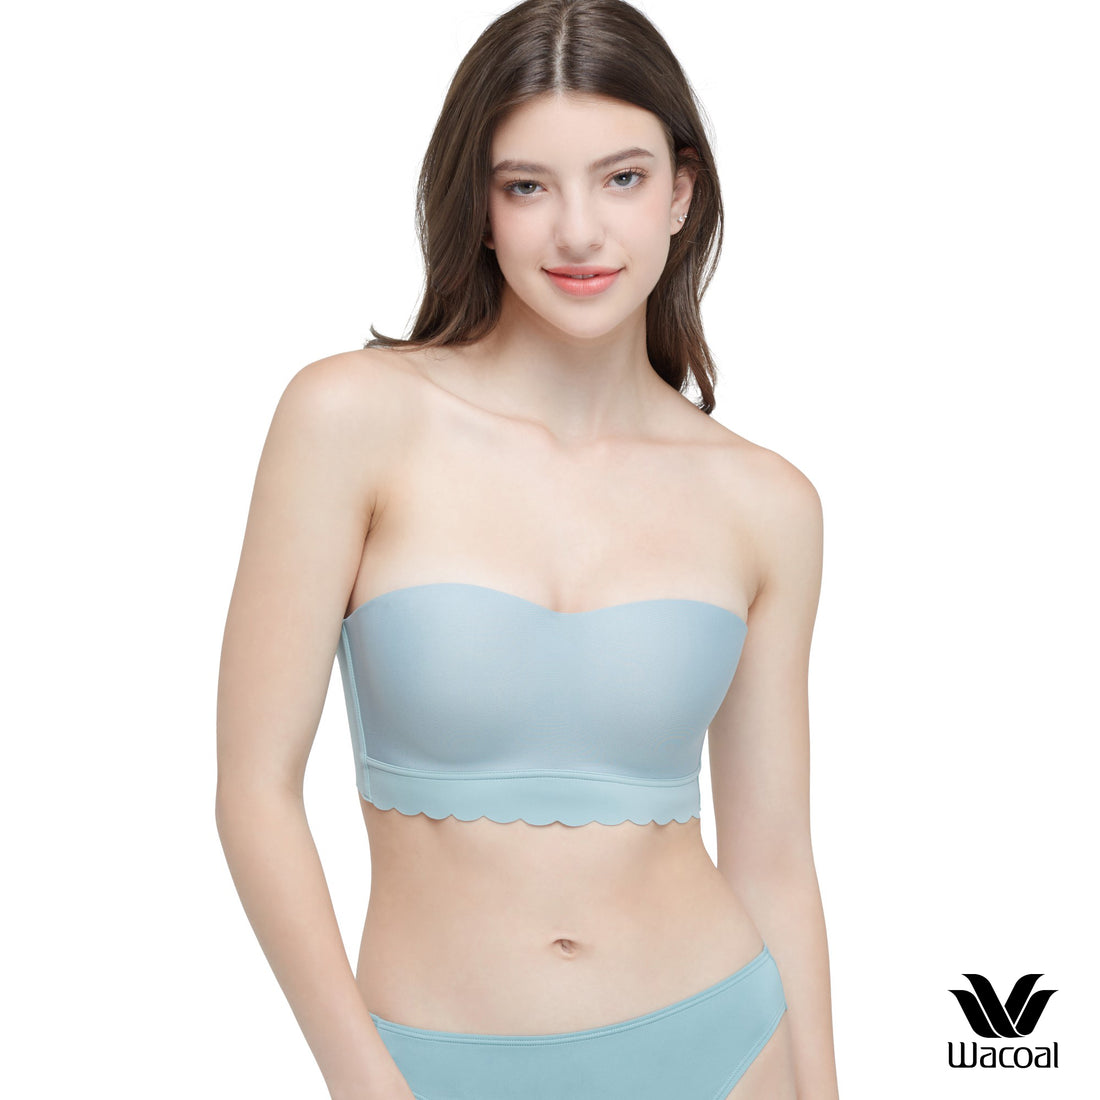 Wacoal Go Girls Smart Size Wavy Top Wacoal strapless bra, comfortable fit,  model WB3Y31, light blue (LT)